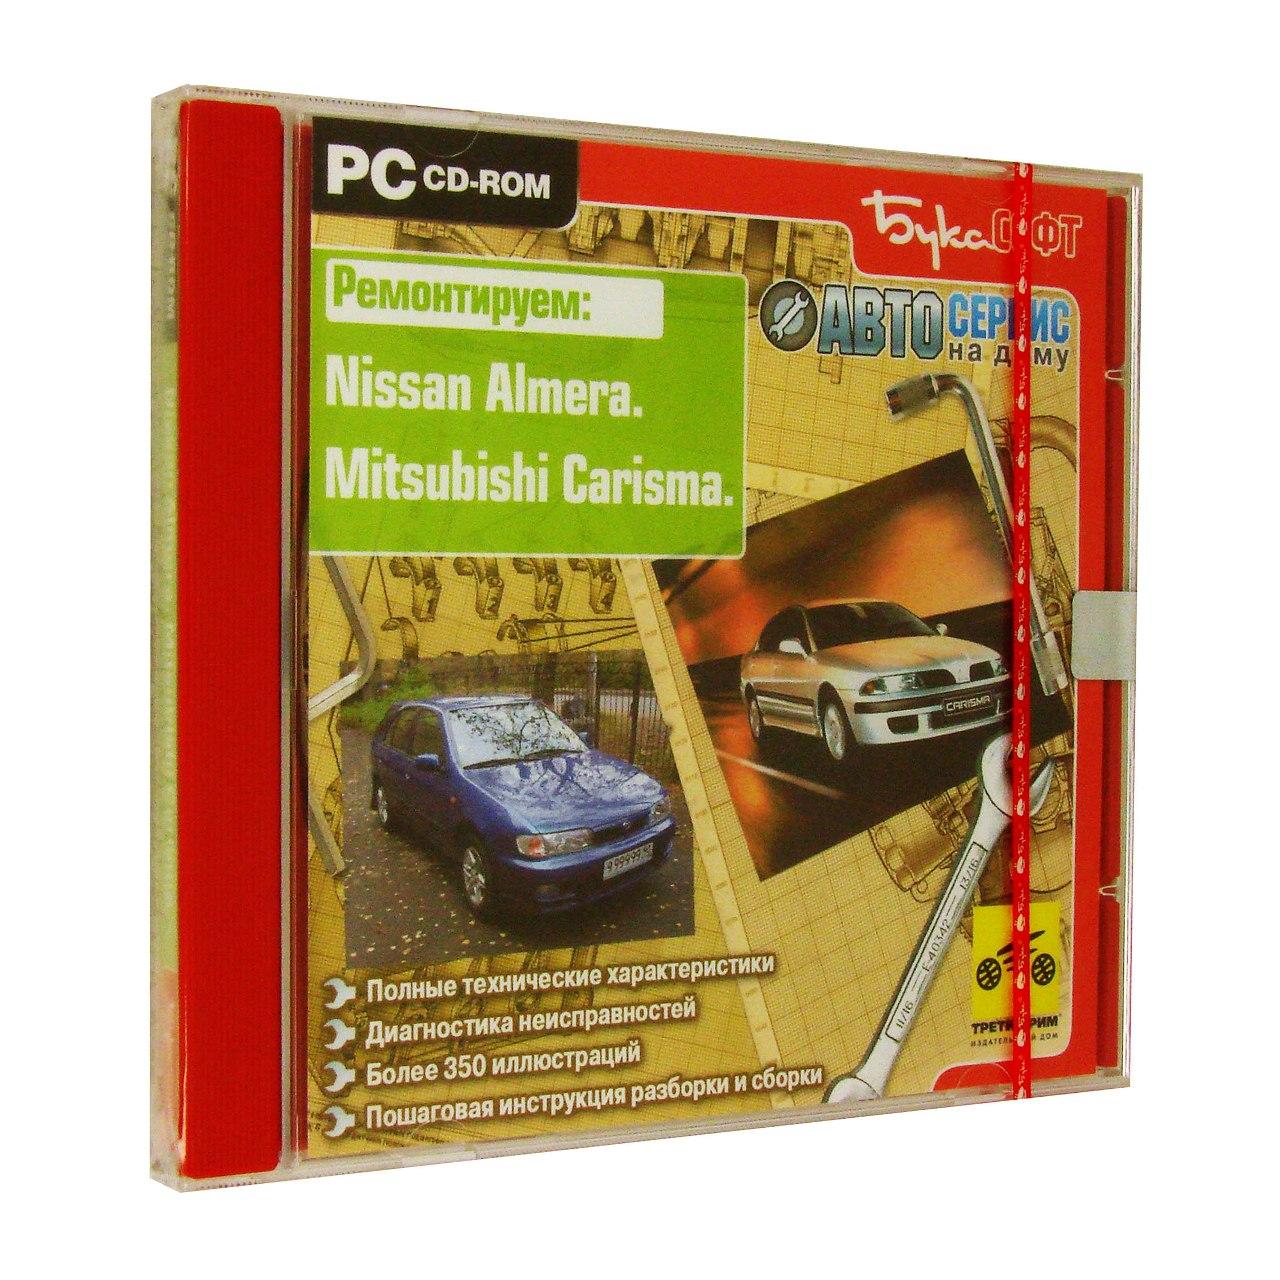 Компьютерный компакт-диск Nissan Almera. Mitsubishi Carisma. ’Автосервис на дому’. (ПК), фирма "Бука", 1CD